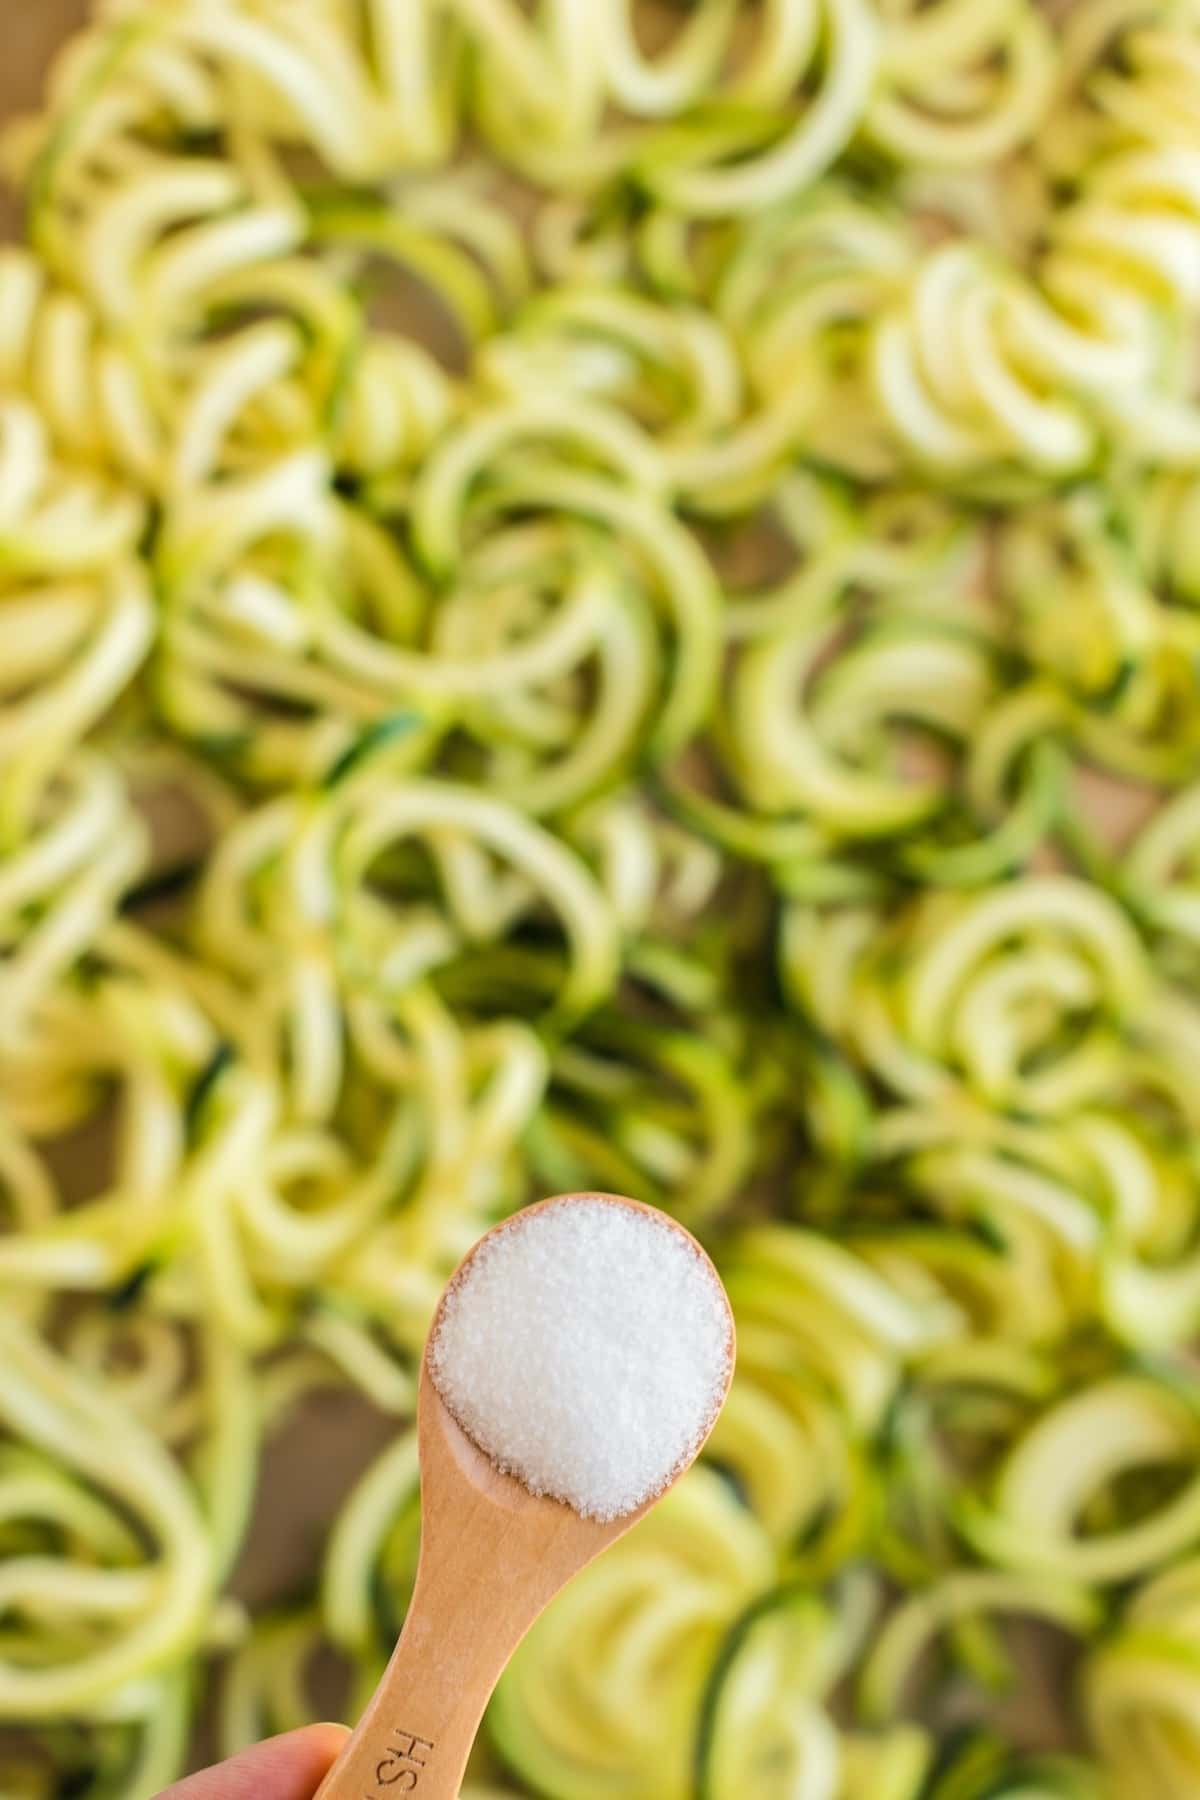 add salt to the spiral zucchini